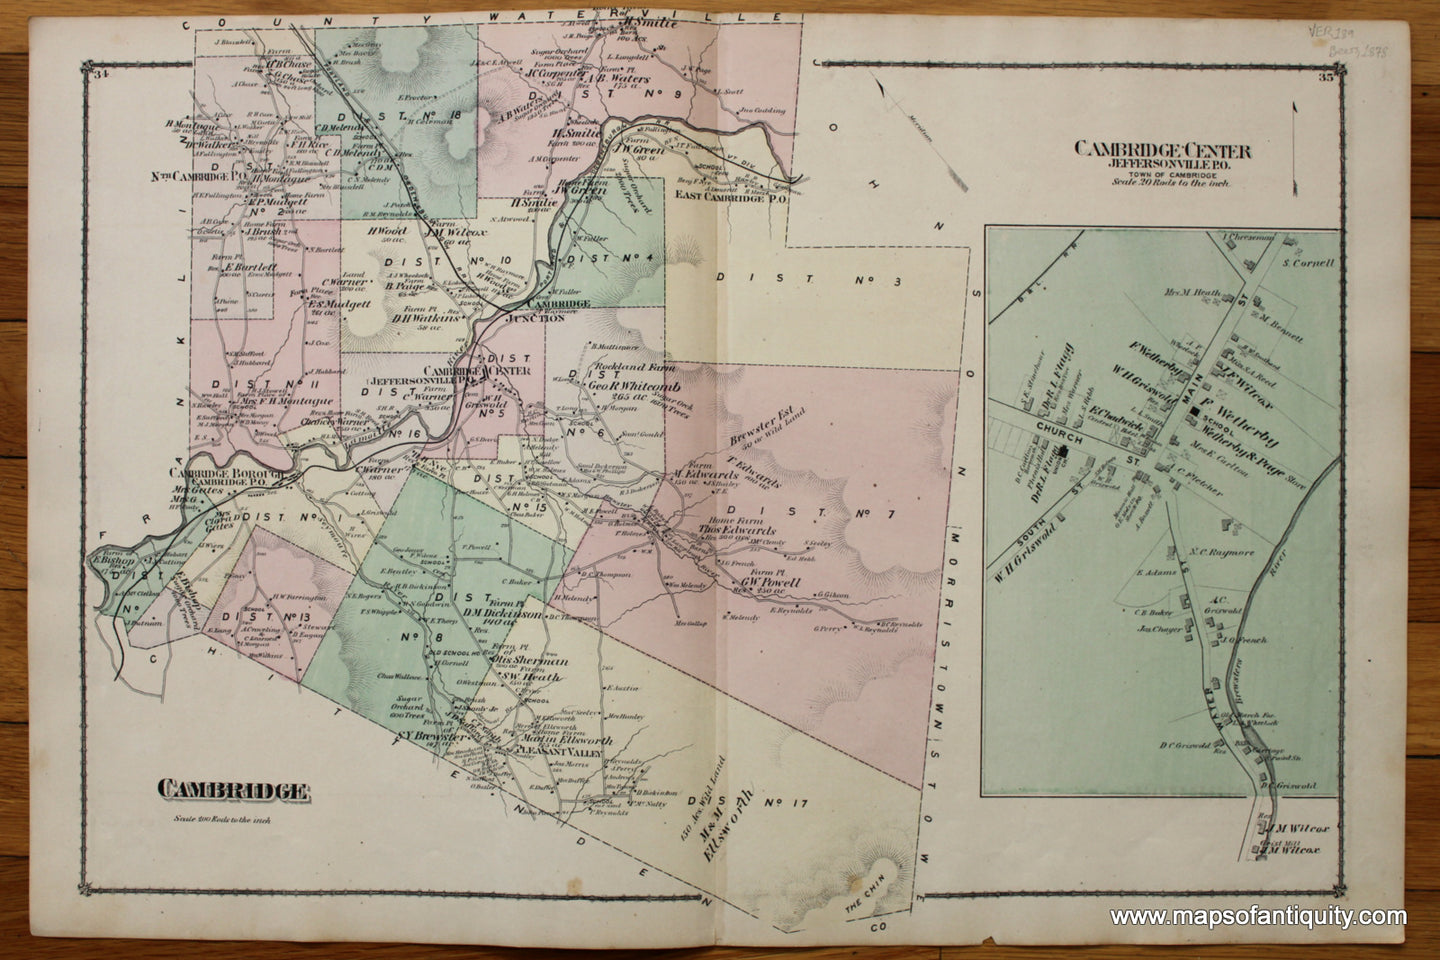 Antique-Hand-Colored-Map-Cambridge-Cambridge-Center-Jeffersonville-P.O.-Verso:-Cambridge-Borough-and-Morrisville-(VT)-United-States-Northeast-1878-Beers-Maps-Of-Antiquity